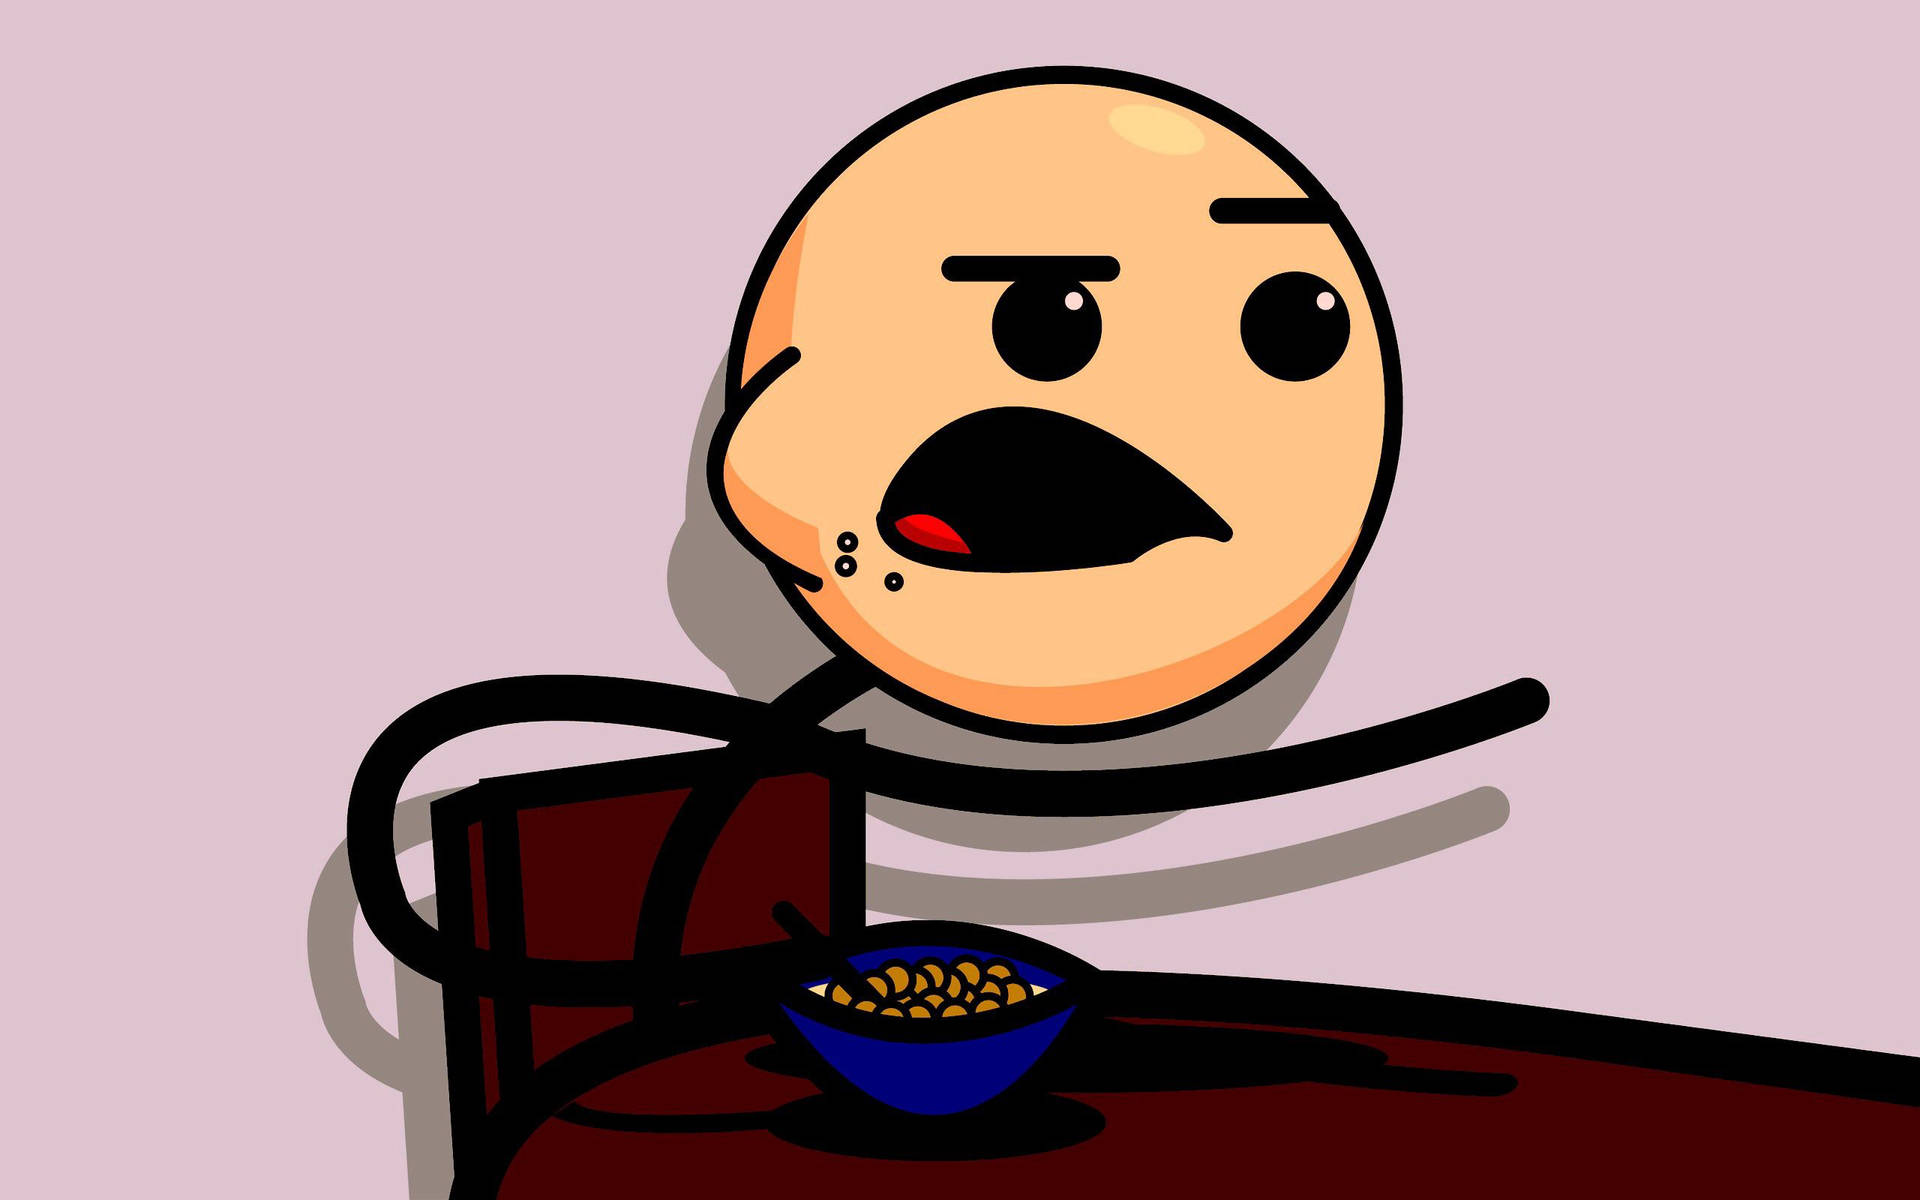 Stick man meme eating cereal showing surprising emotion.